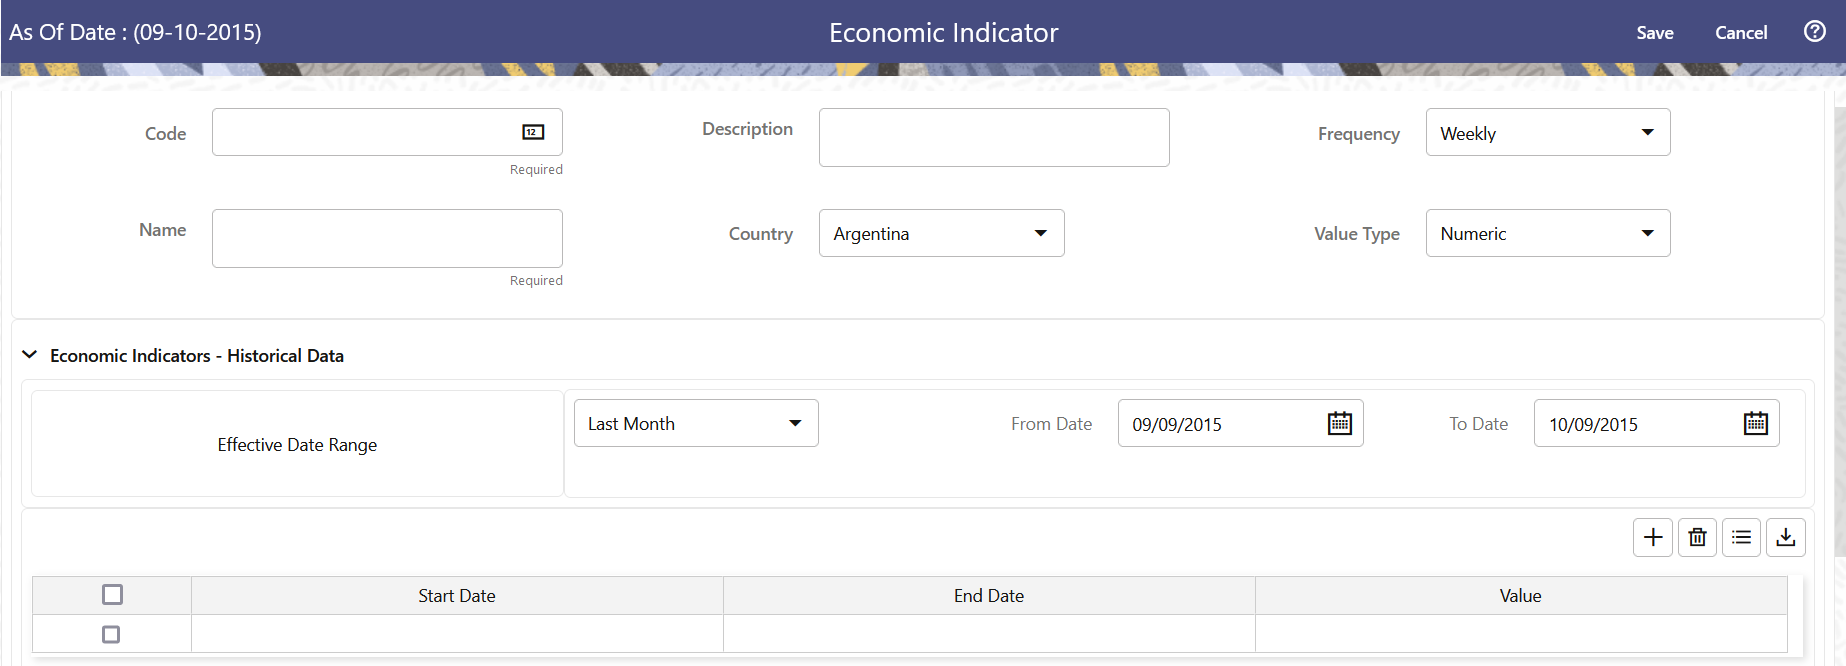 Economic Indicator Details Page